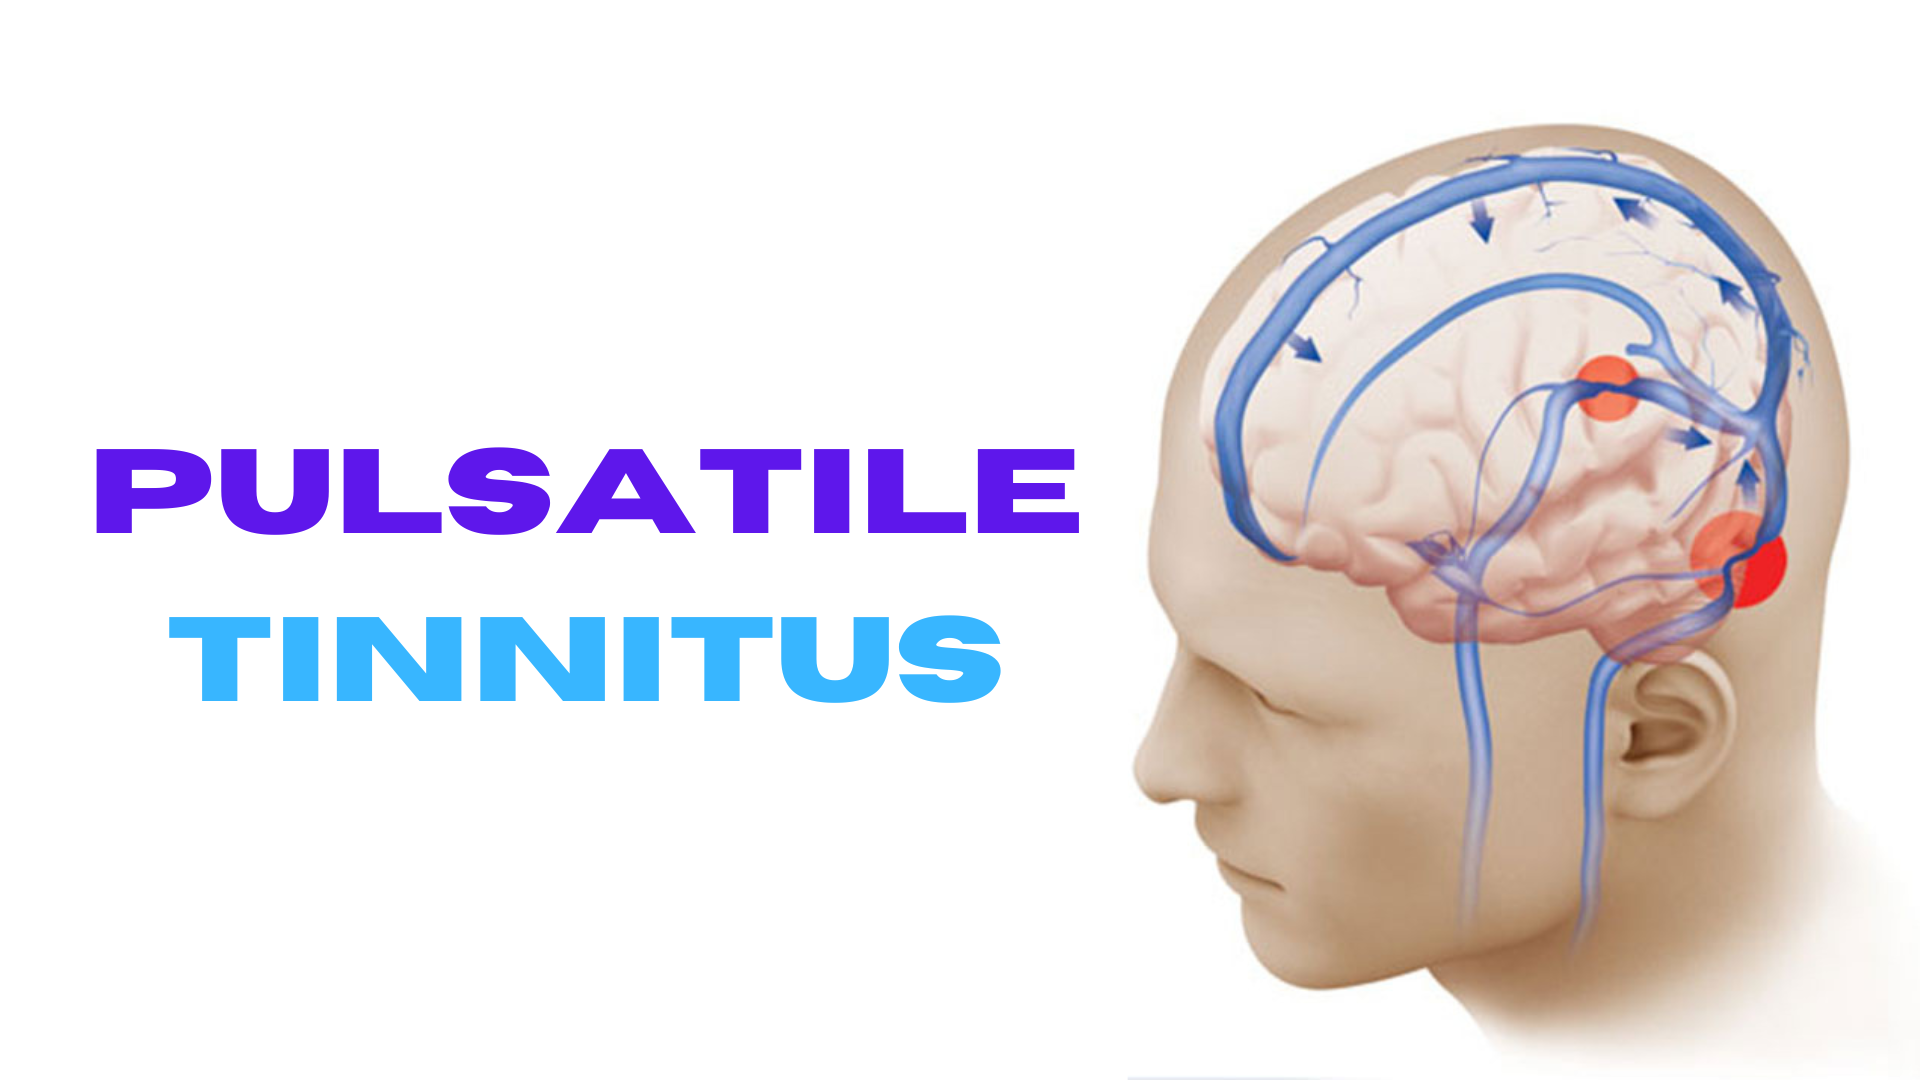 Pulsatile Tinnitus: Understanding Symptoms And Treatment Options